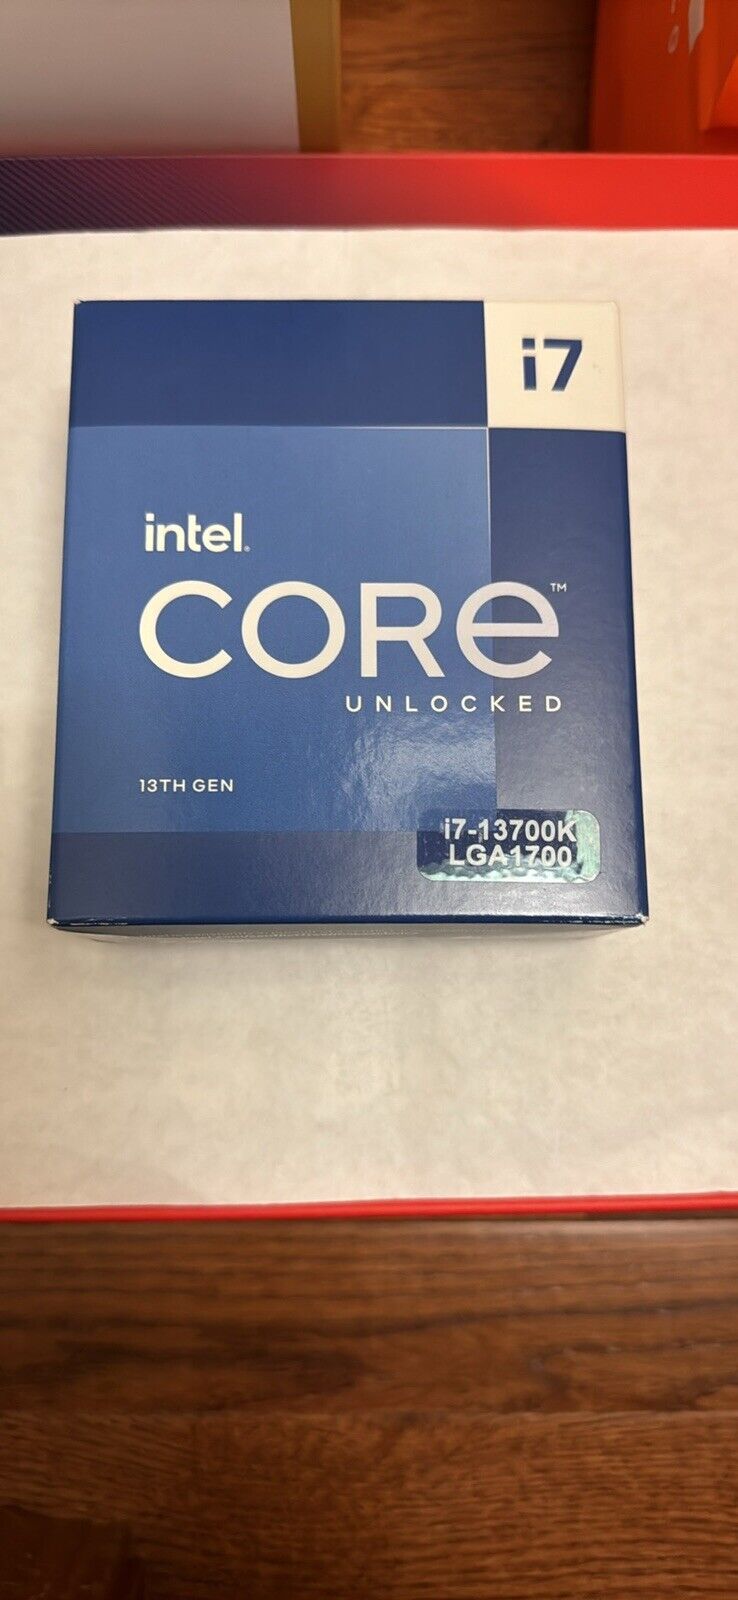 Intel Core i7-13700K Unlocked Desktop Processor - 16 Cores (8P+8P) & 24 Threads